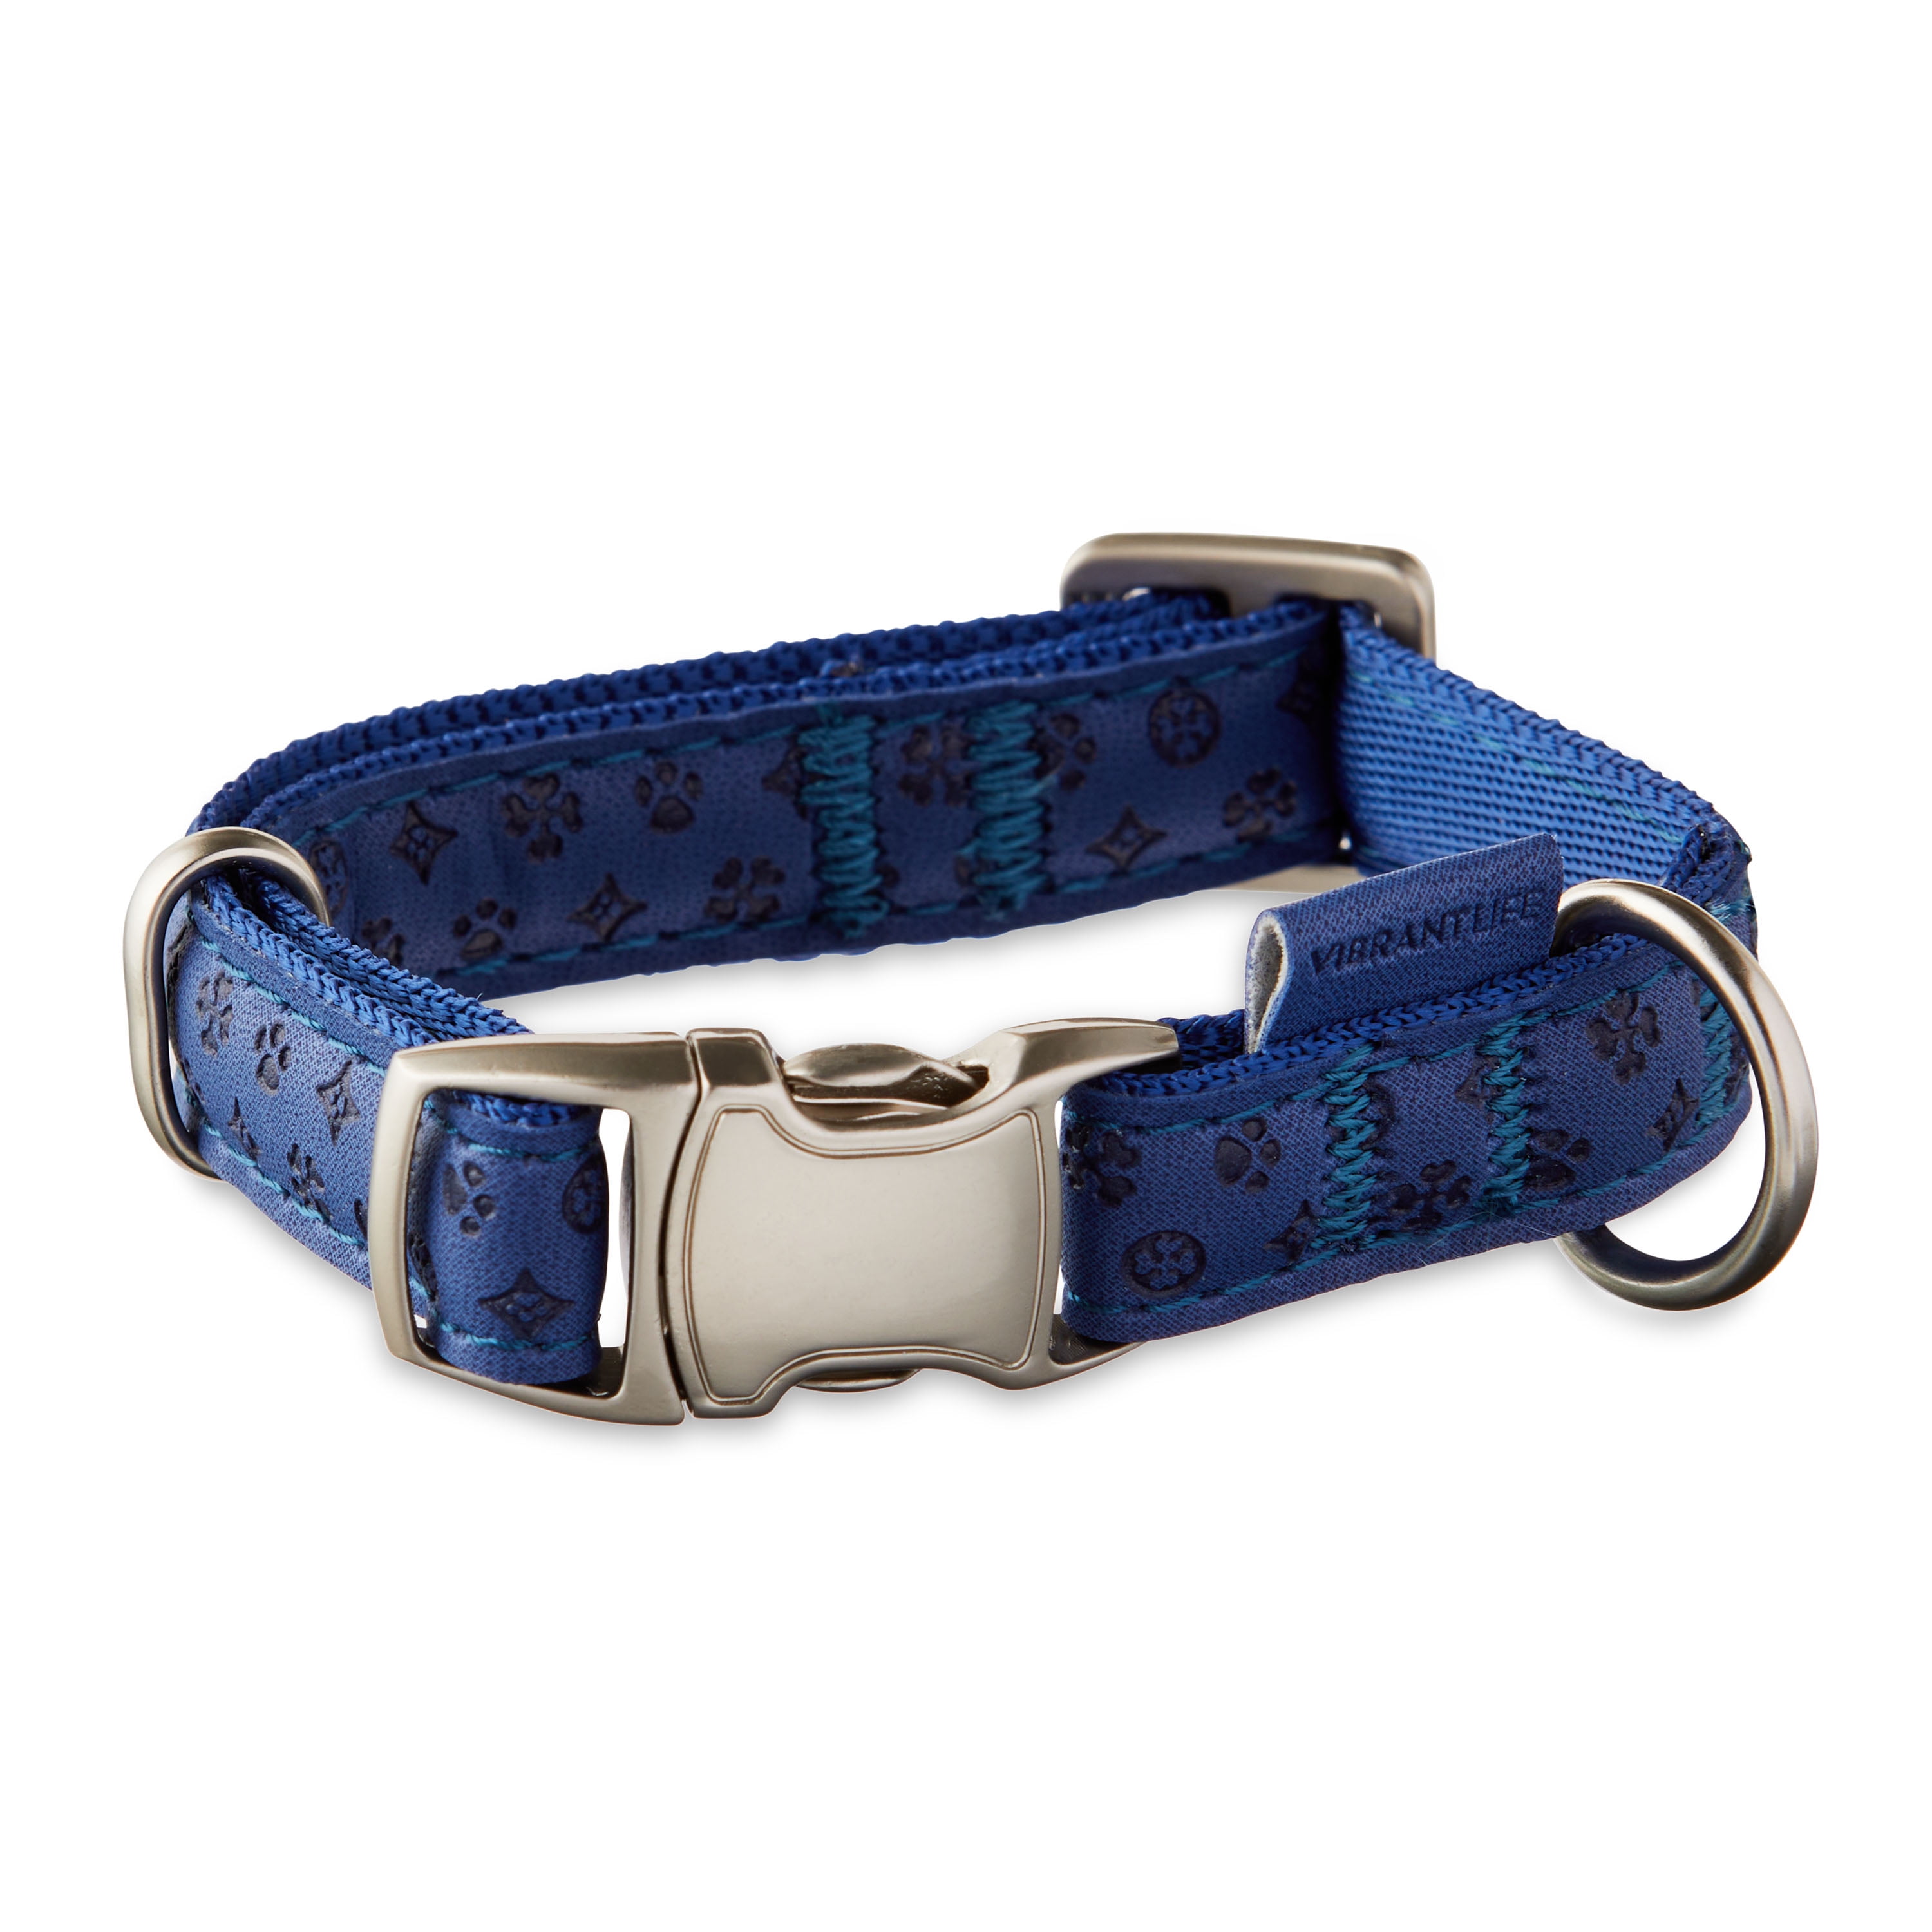 Vibrant Life Embossed Adjustable Dog Collar, Navy Blue, S